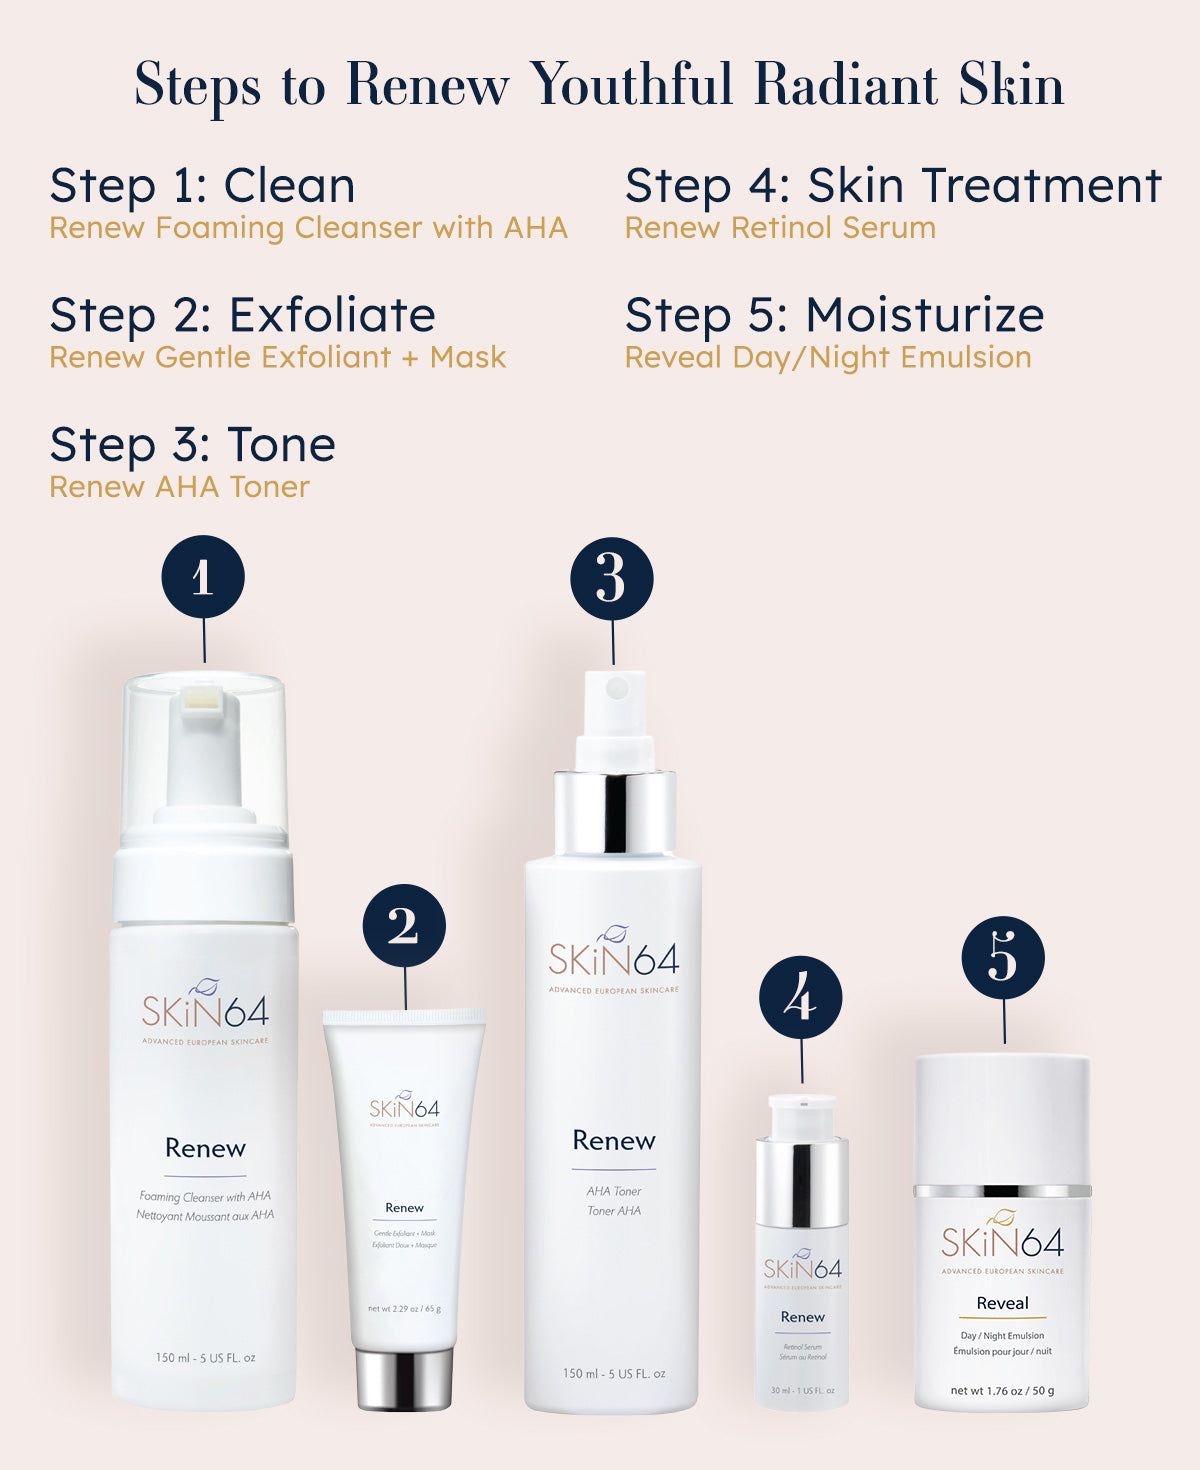 How to use the reveal skin care: 1) renew foaming cleanser, 2) renew gentle exfoliant mask, 3) renew aha toner, 4) renew retinol serum, 4) reveal day/night emulsion